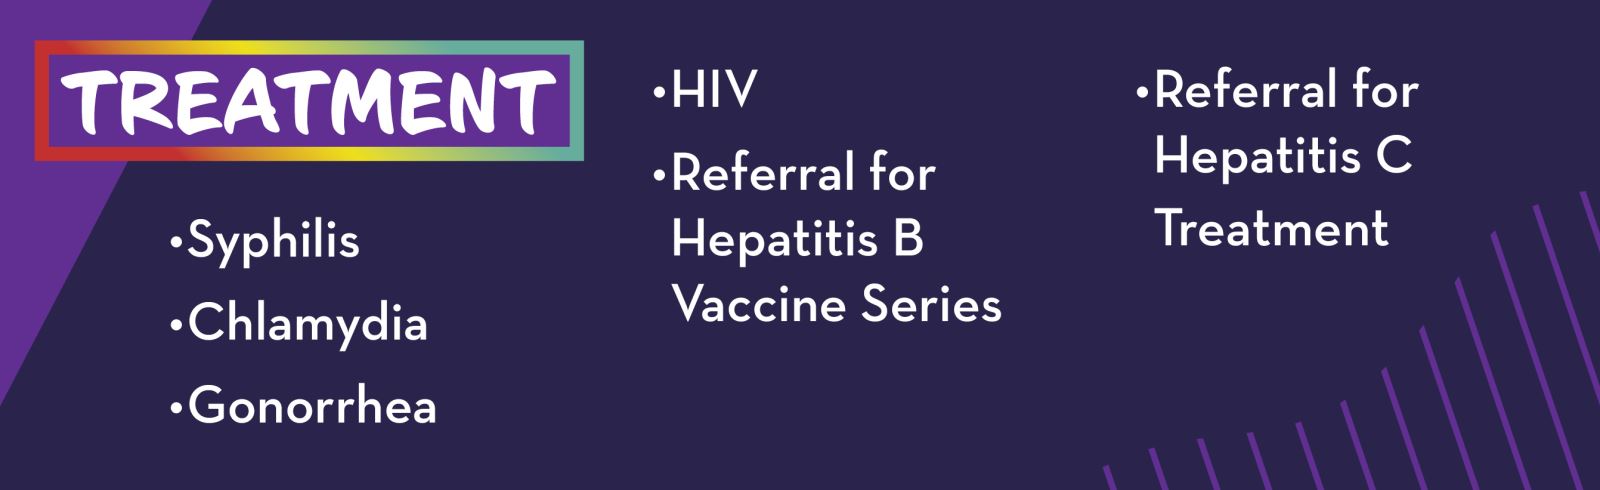 treatment - Syphilis, Chlamydia, Gonorrhea, HIV, Referral for Hepatitis B Vaccine Series, Referral for Hepatitis C treatmentT